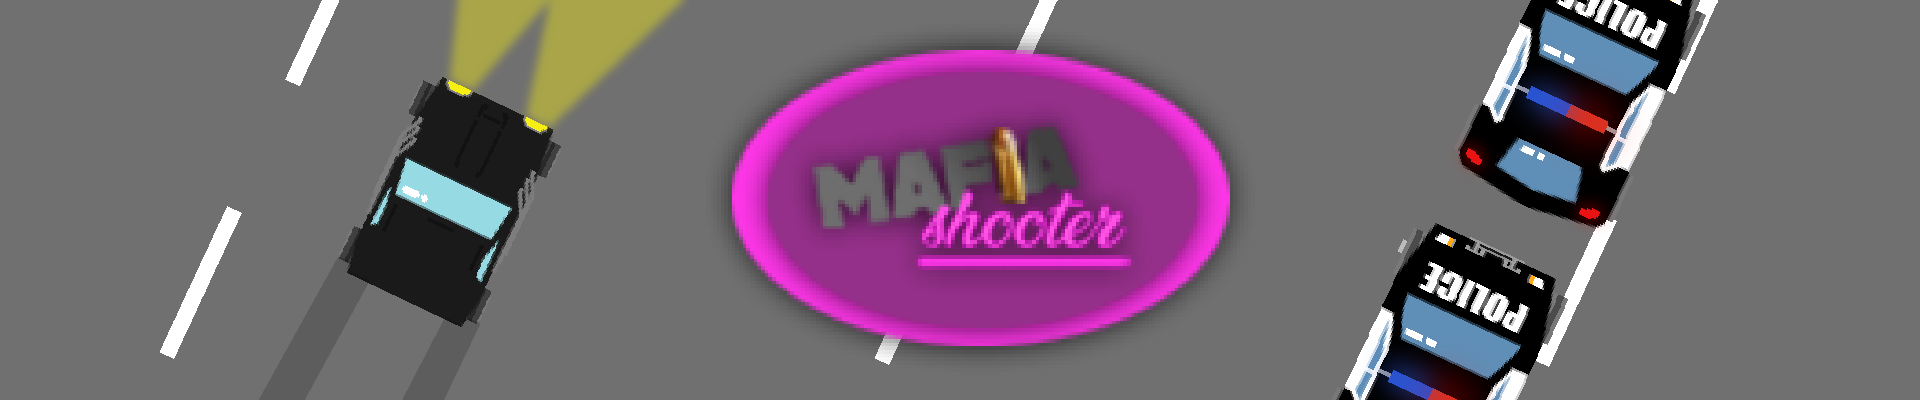 Mafia Shooter